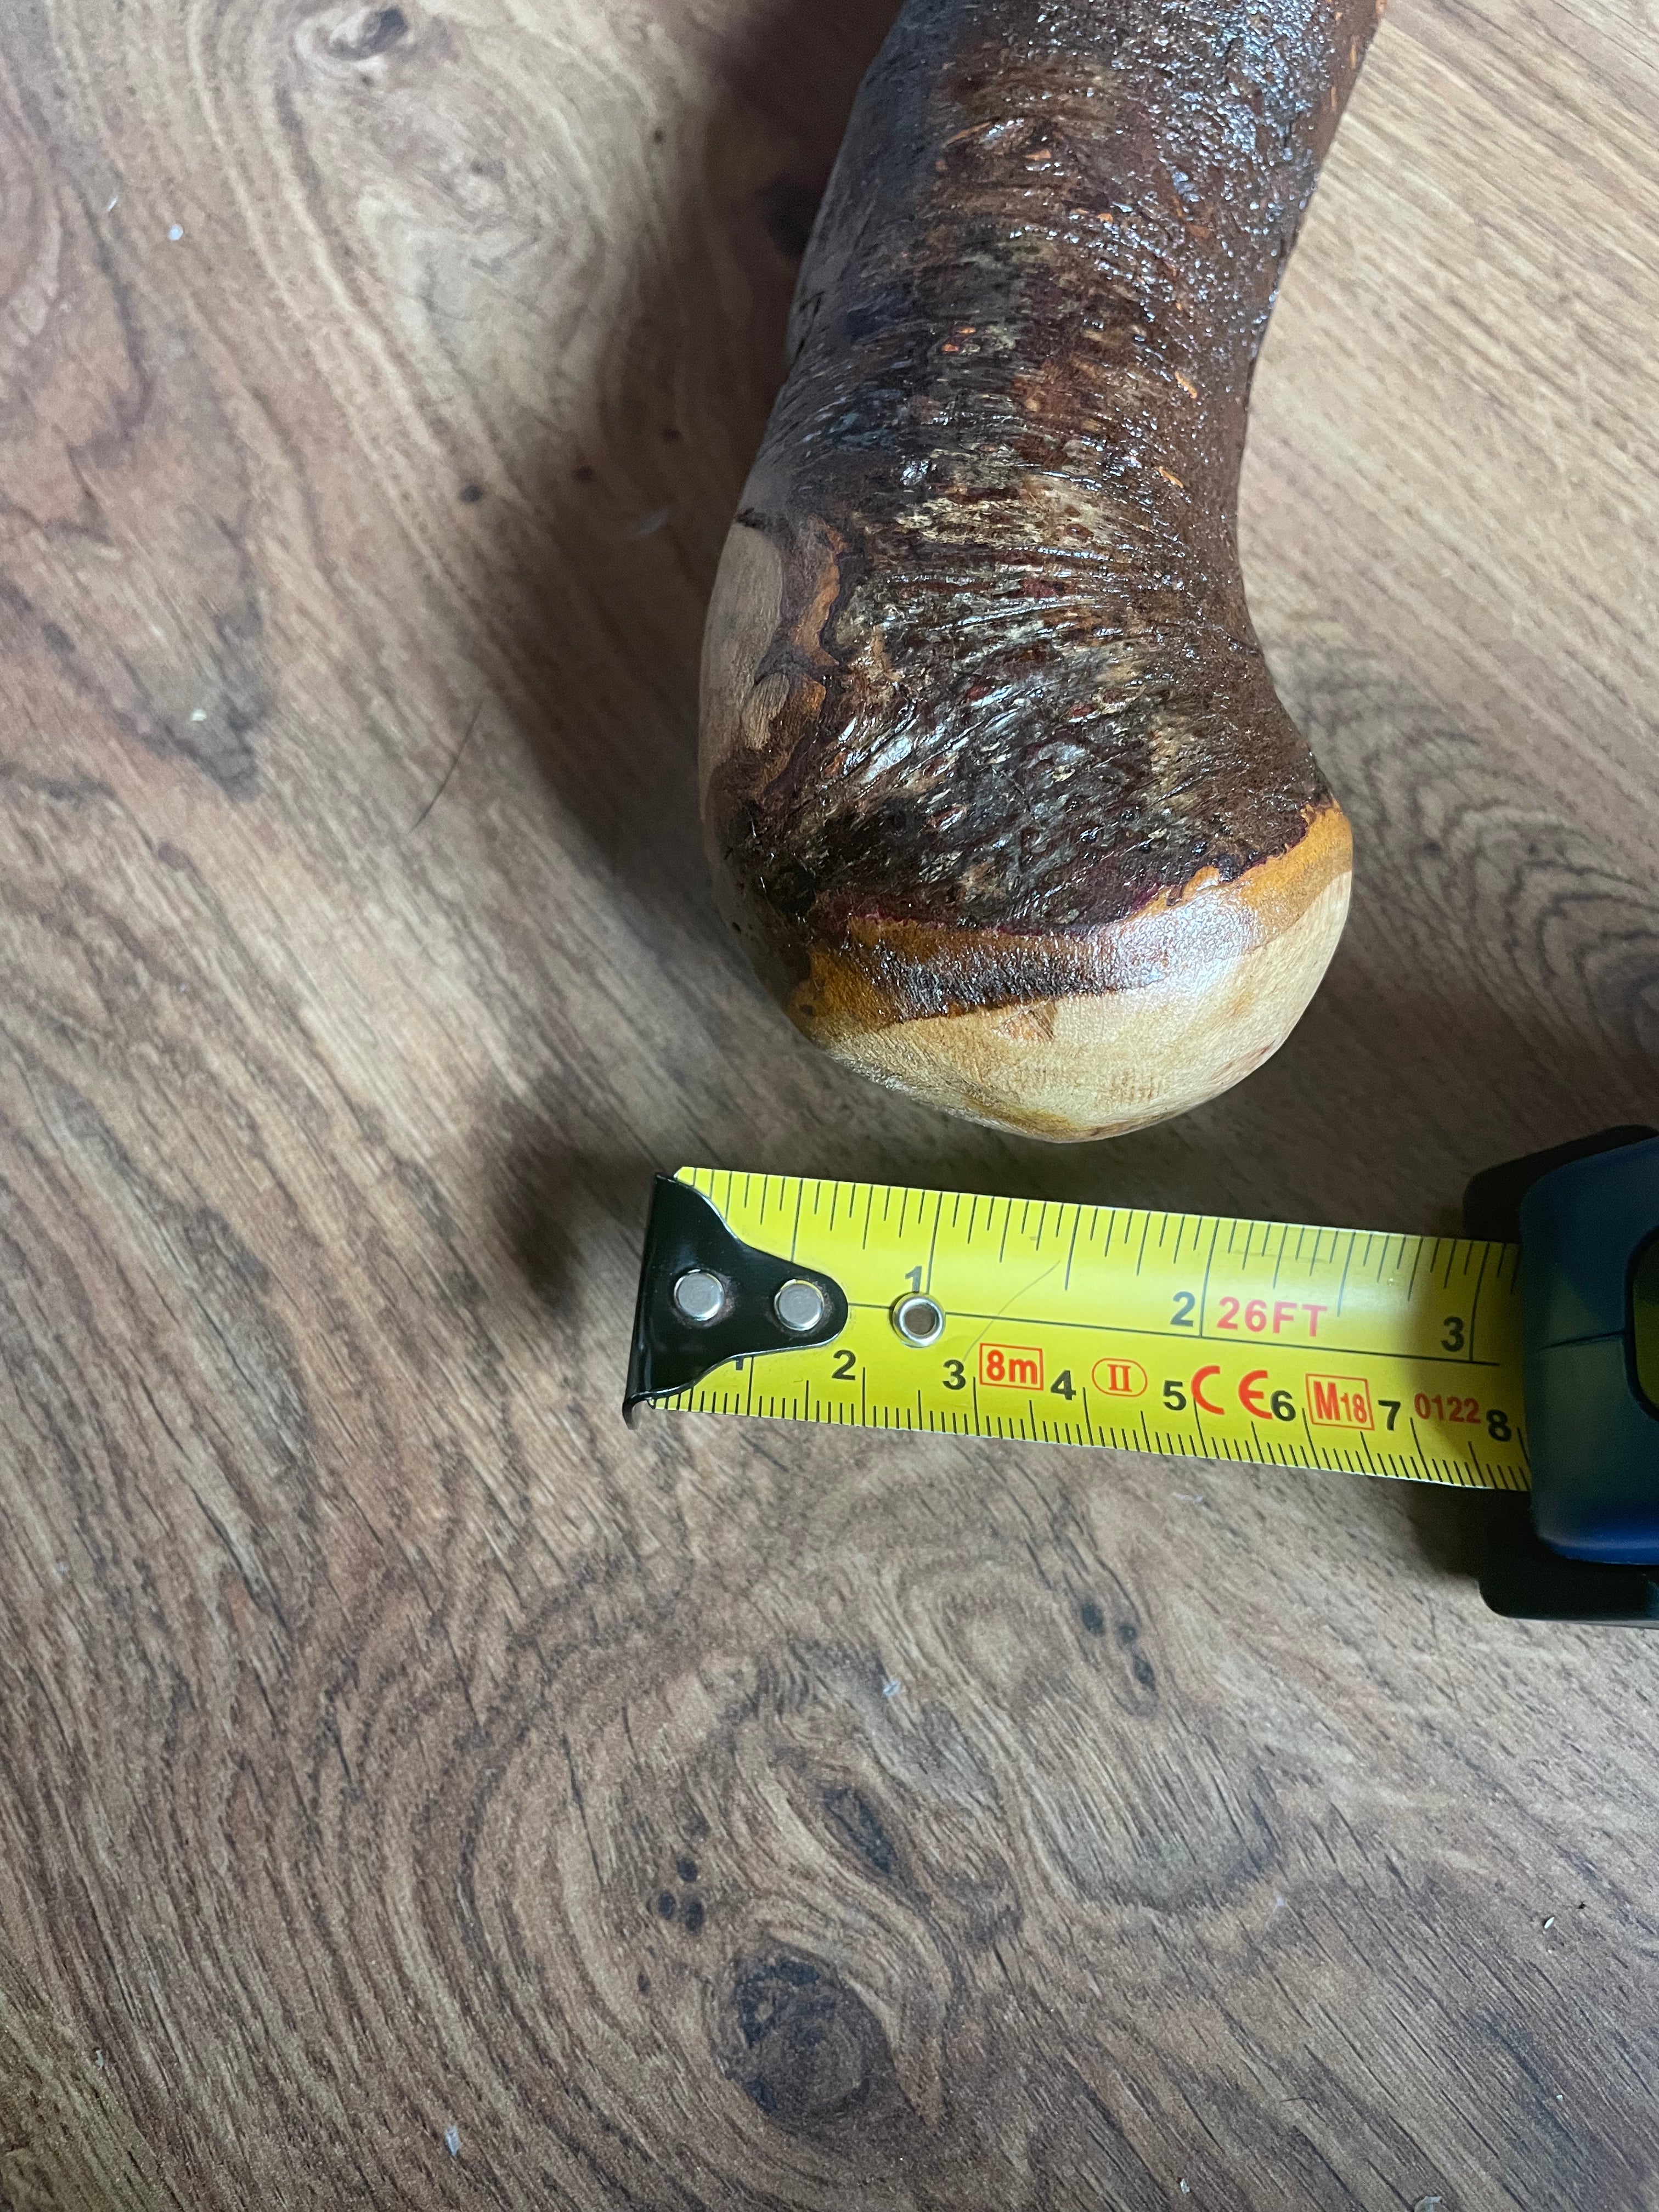 Blackthorn Shillelagh - 22 1/2 inch - Handmade in Ireland